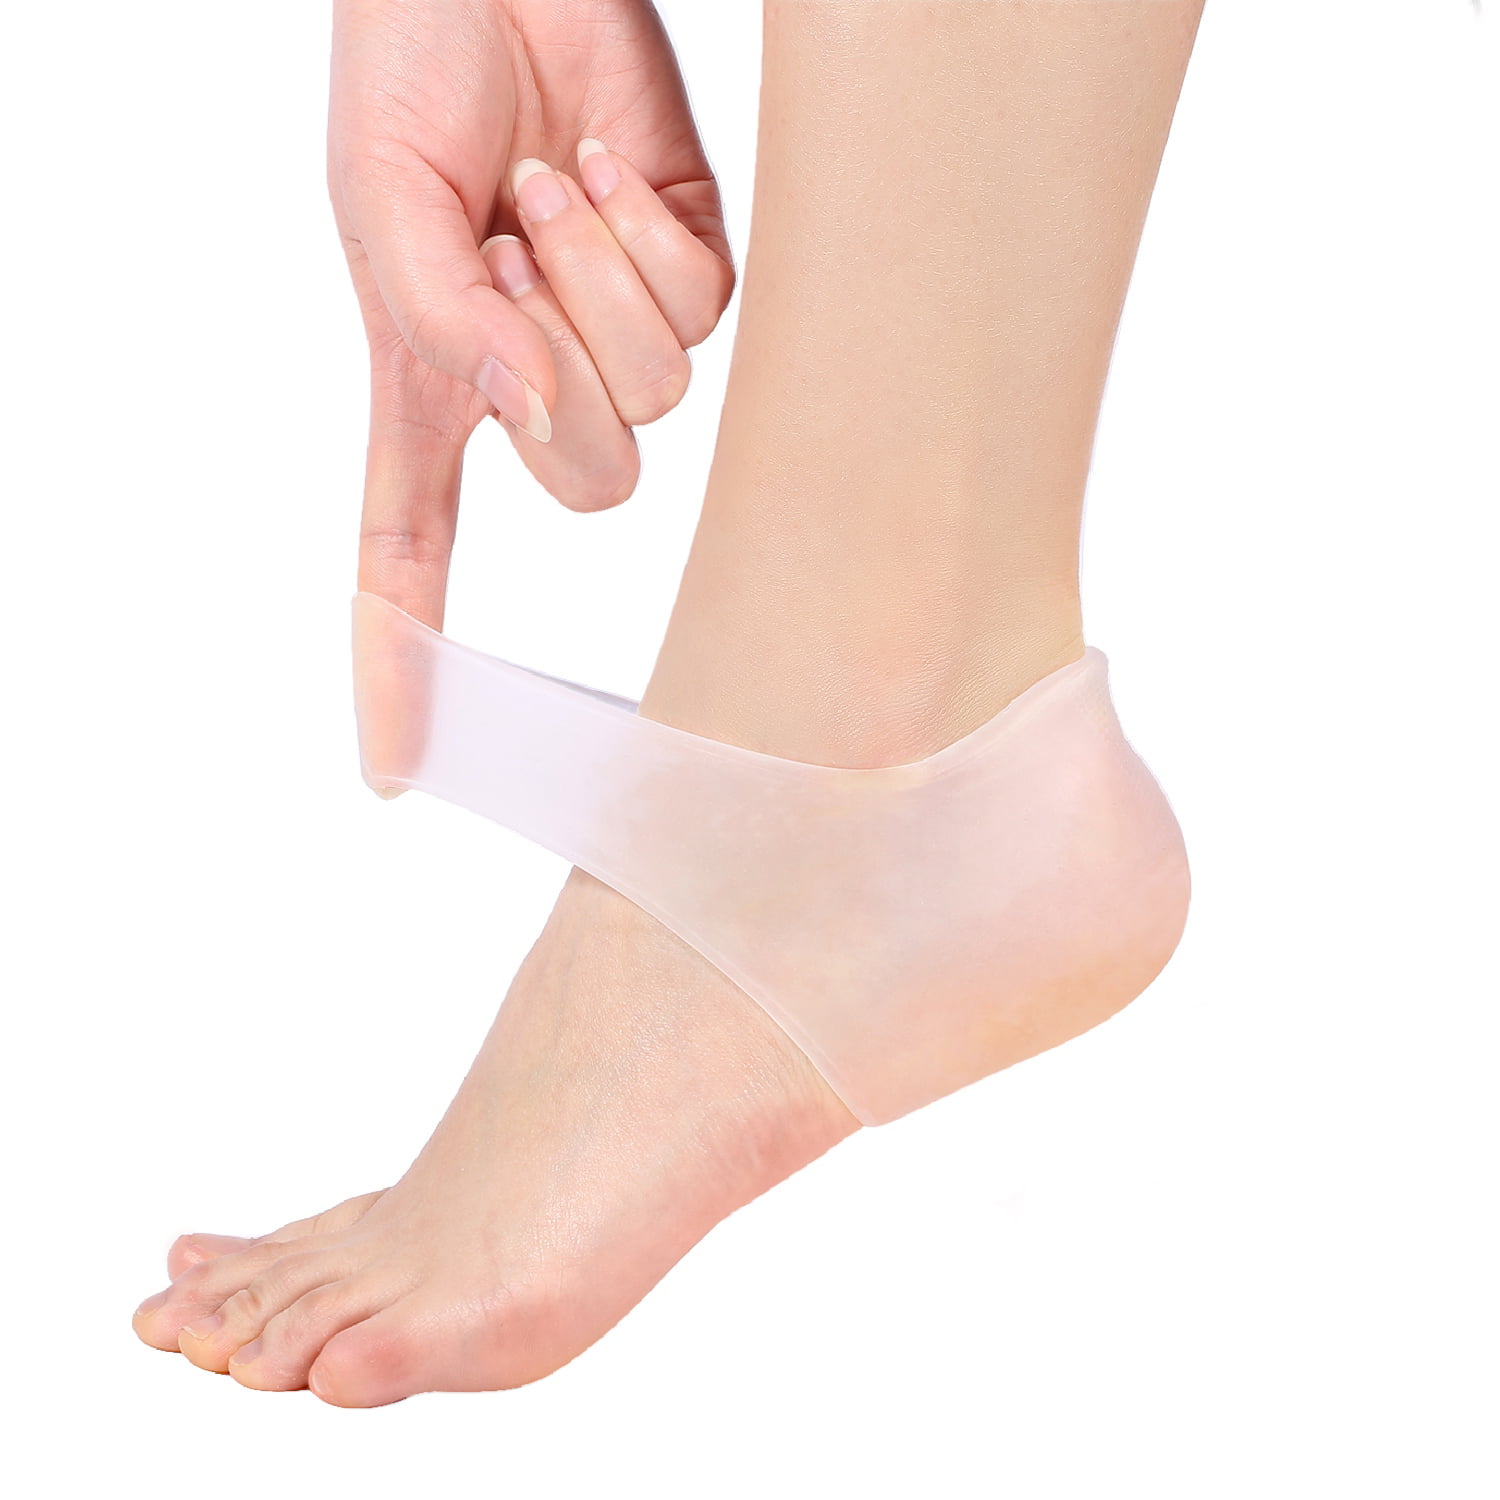 Lv. life 4 Types 2PCS Silicone Moisturizing Gel Heel Protect Socks